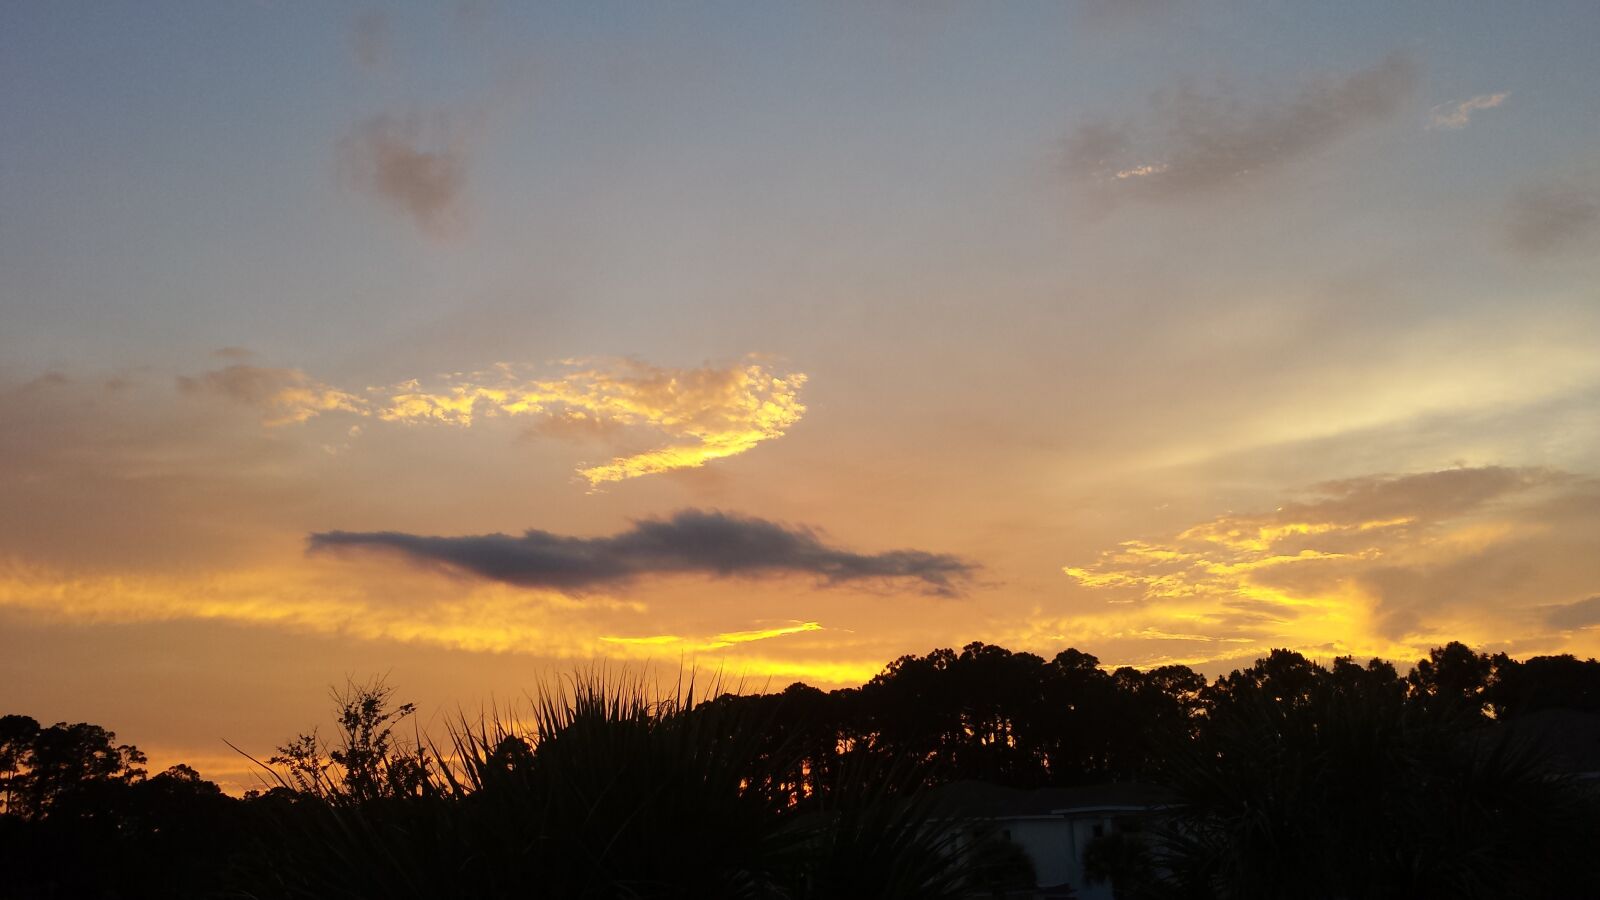 Samsung Galaxy S4 sample photo. Sunset, tranquility, meditation photography